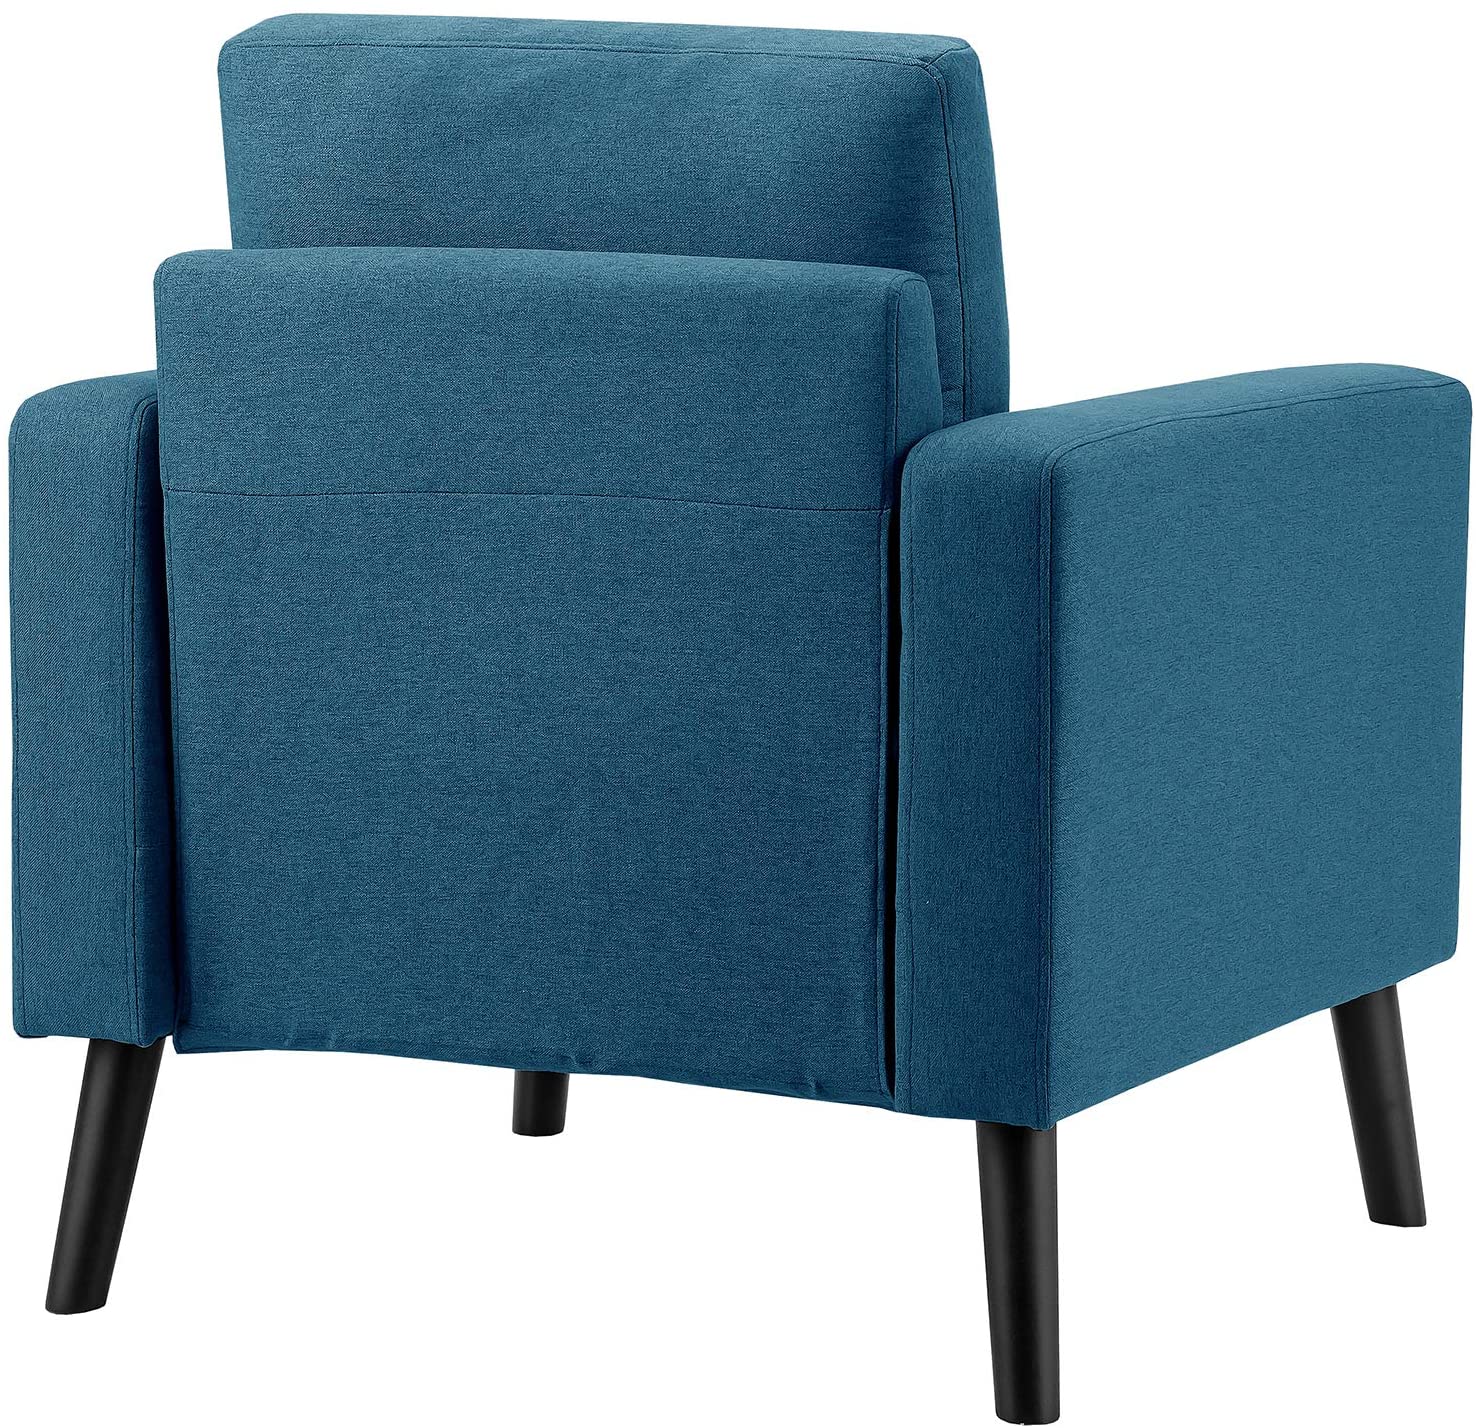 Giantex Modern Accent Chair, Mid-Century Upholstered Armchair Club Chair